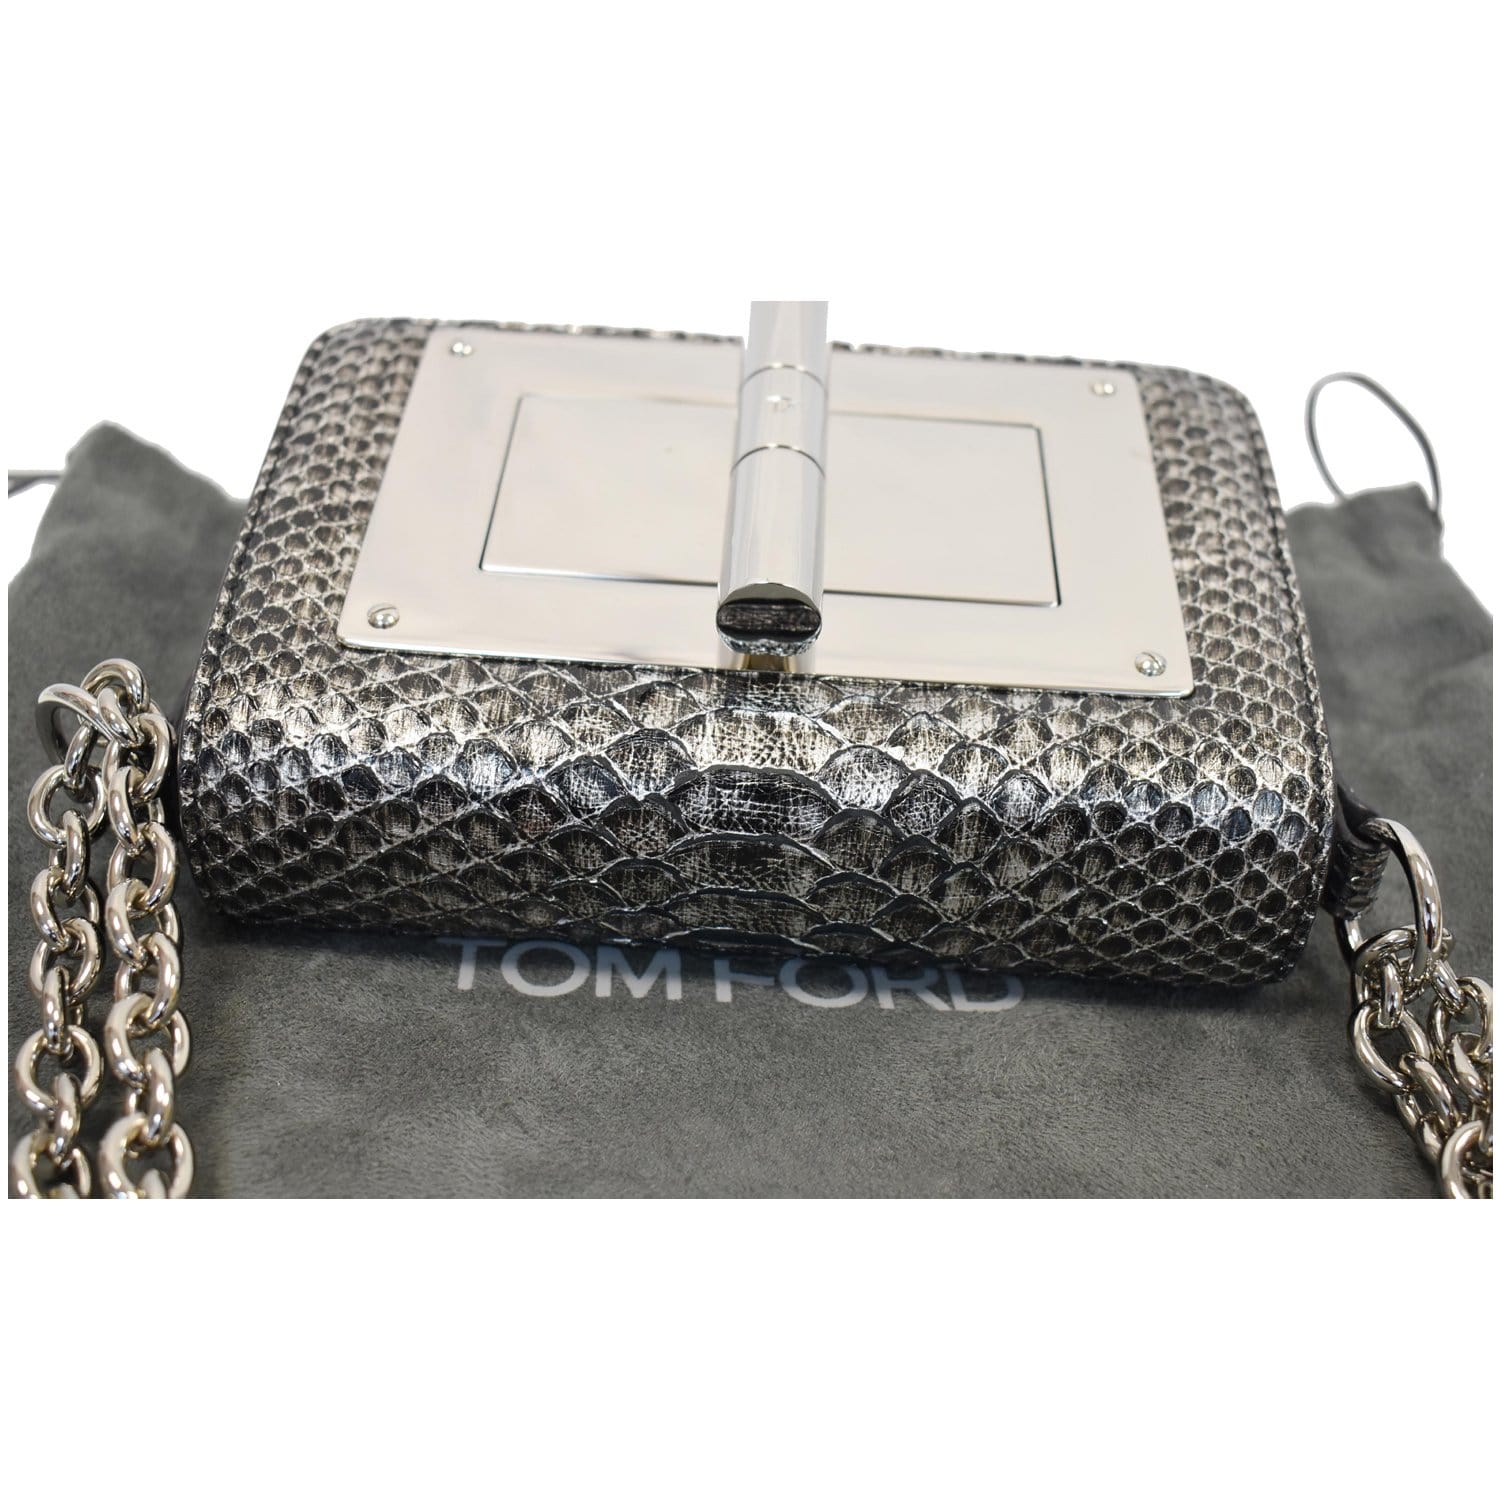 Tom Ford Natalia Medium Anaconda Chain Shoulder Bag